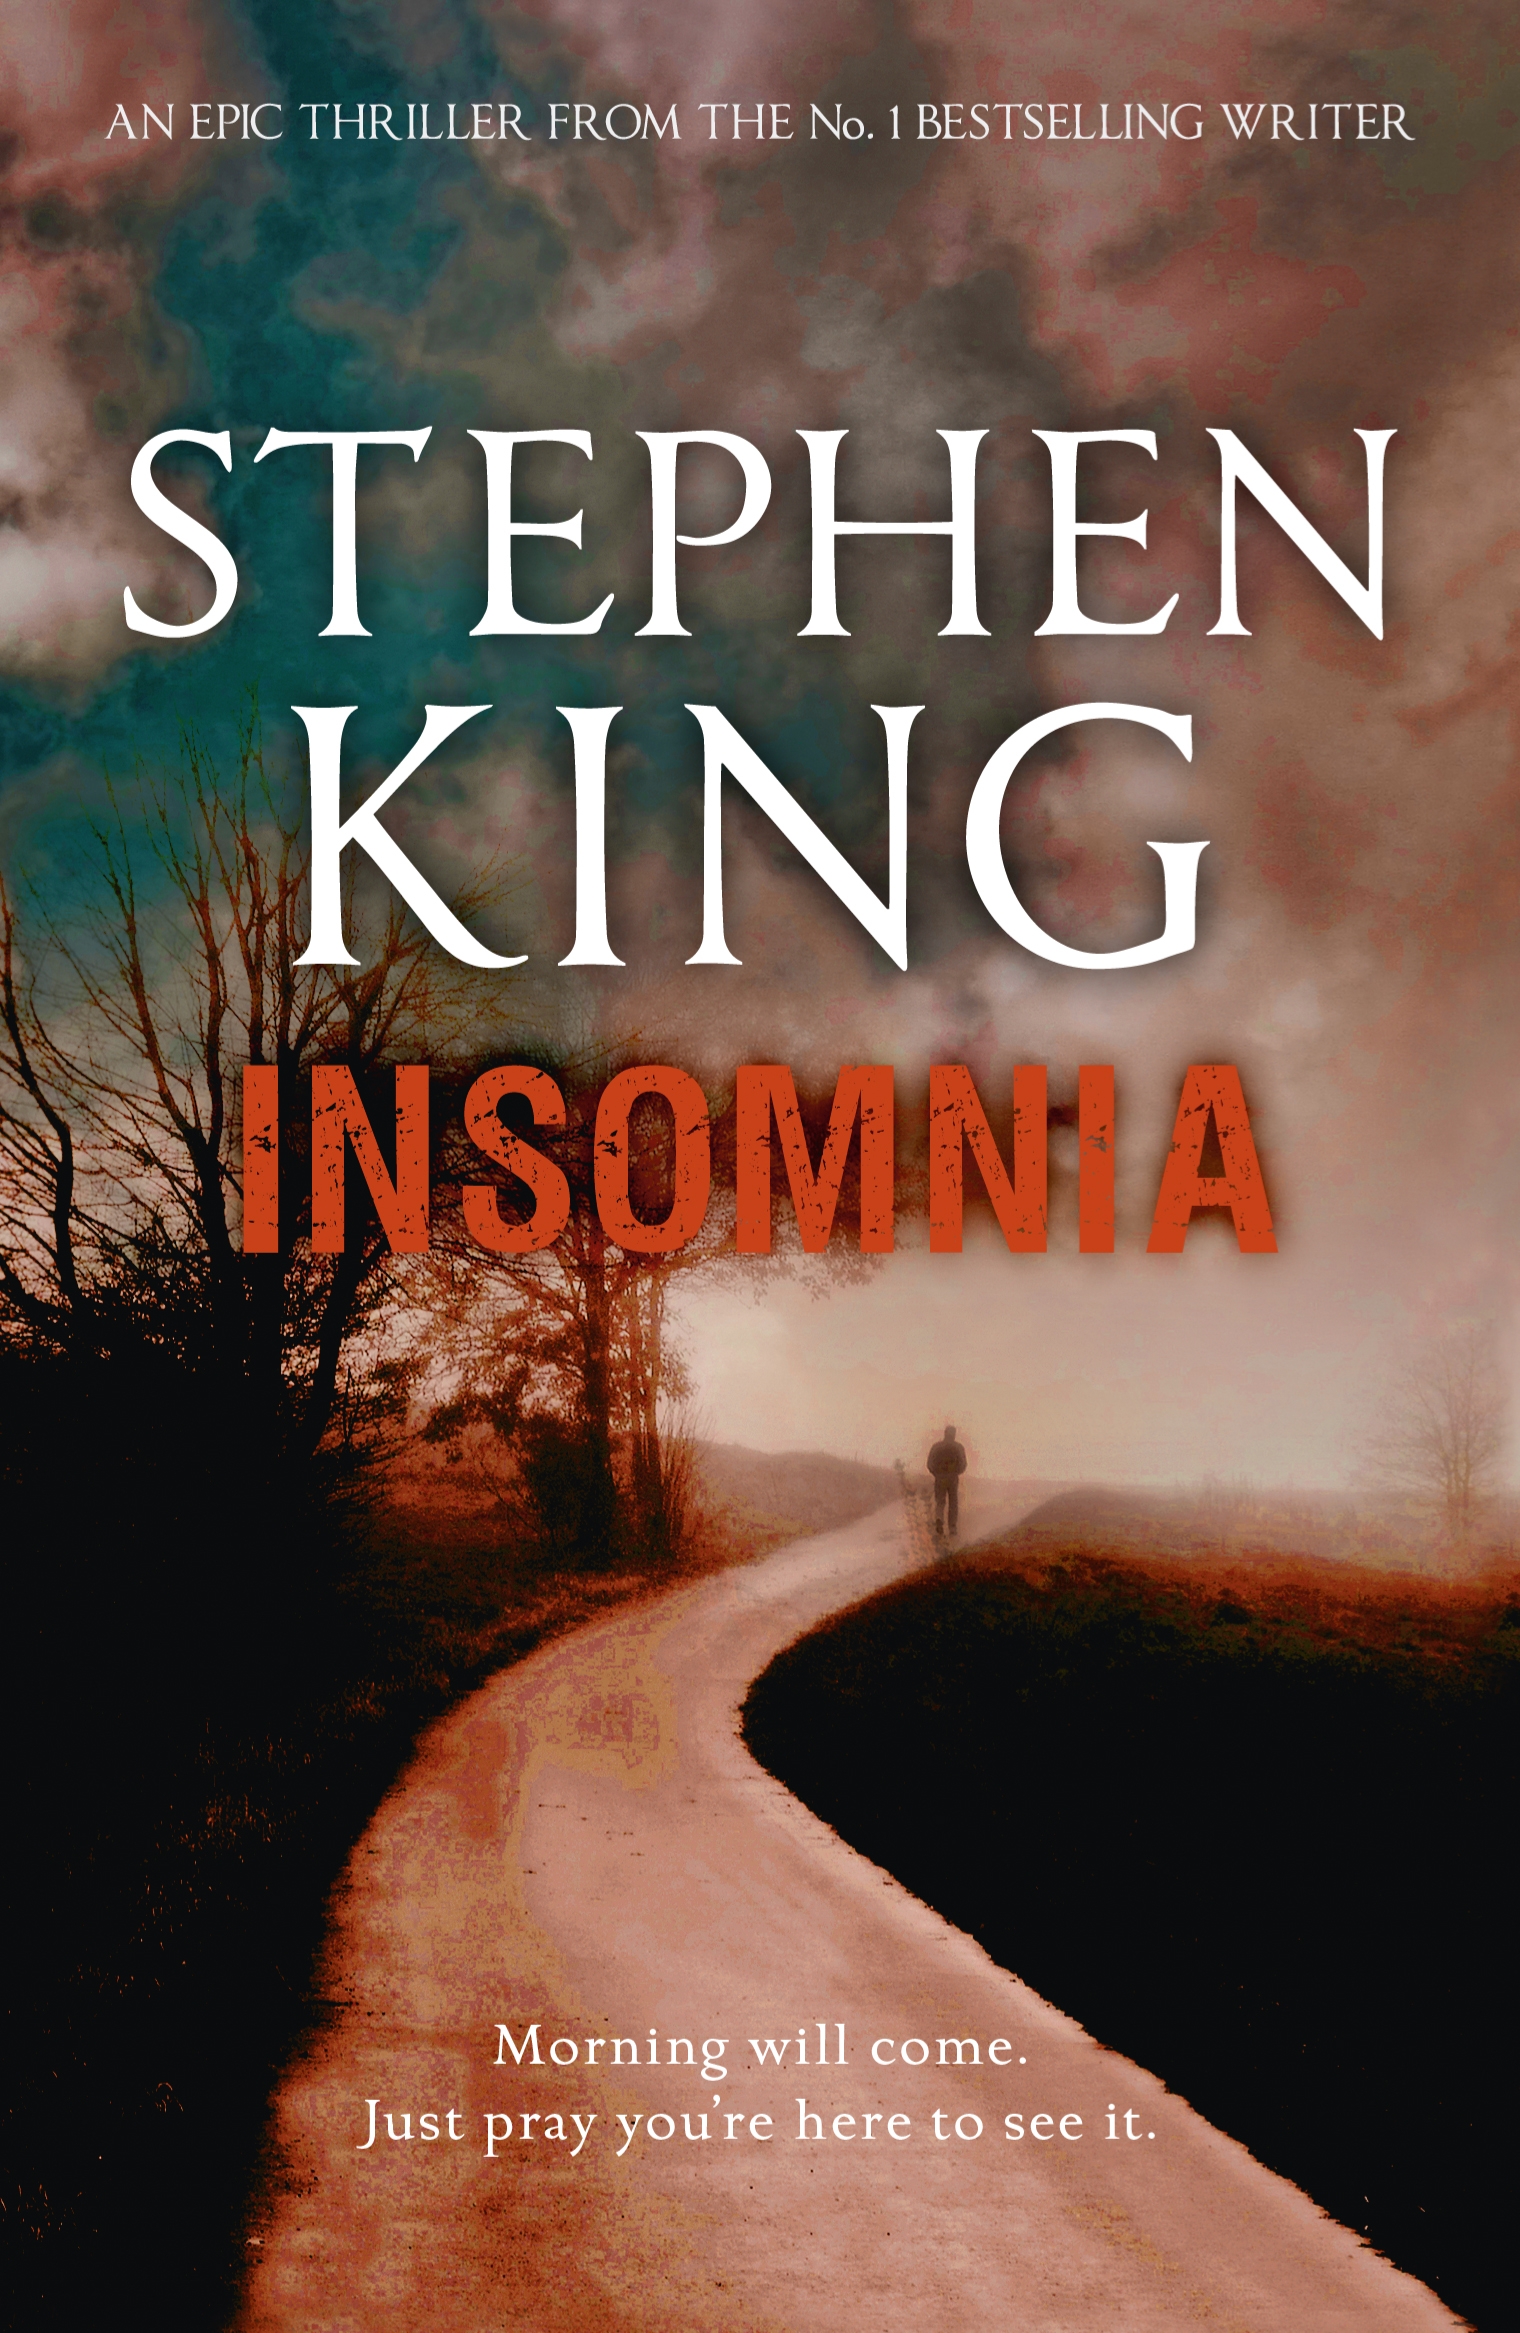 insomnia stephen king value